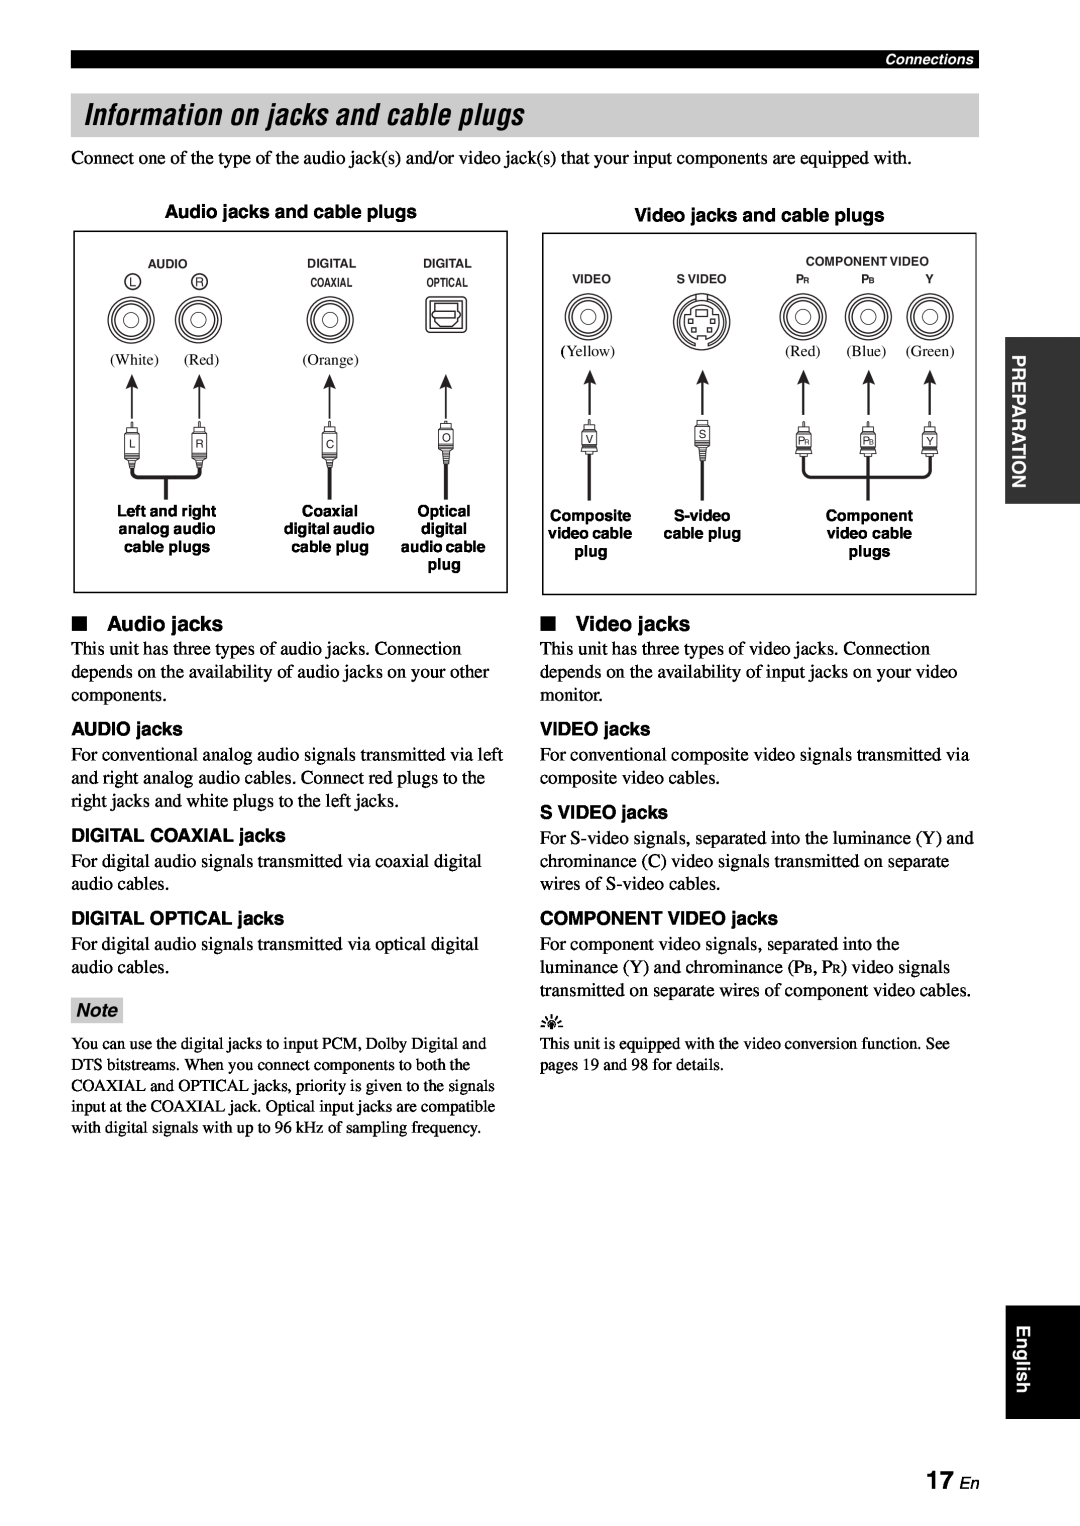 Yamaha RX-V863 owner manual Information on jacks and cable plugs, 17 En, Audio jacks, Video jacks 